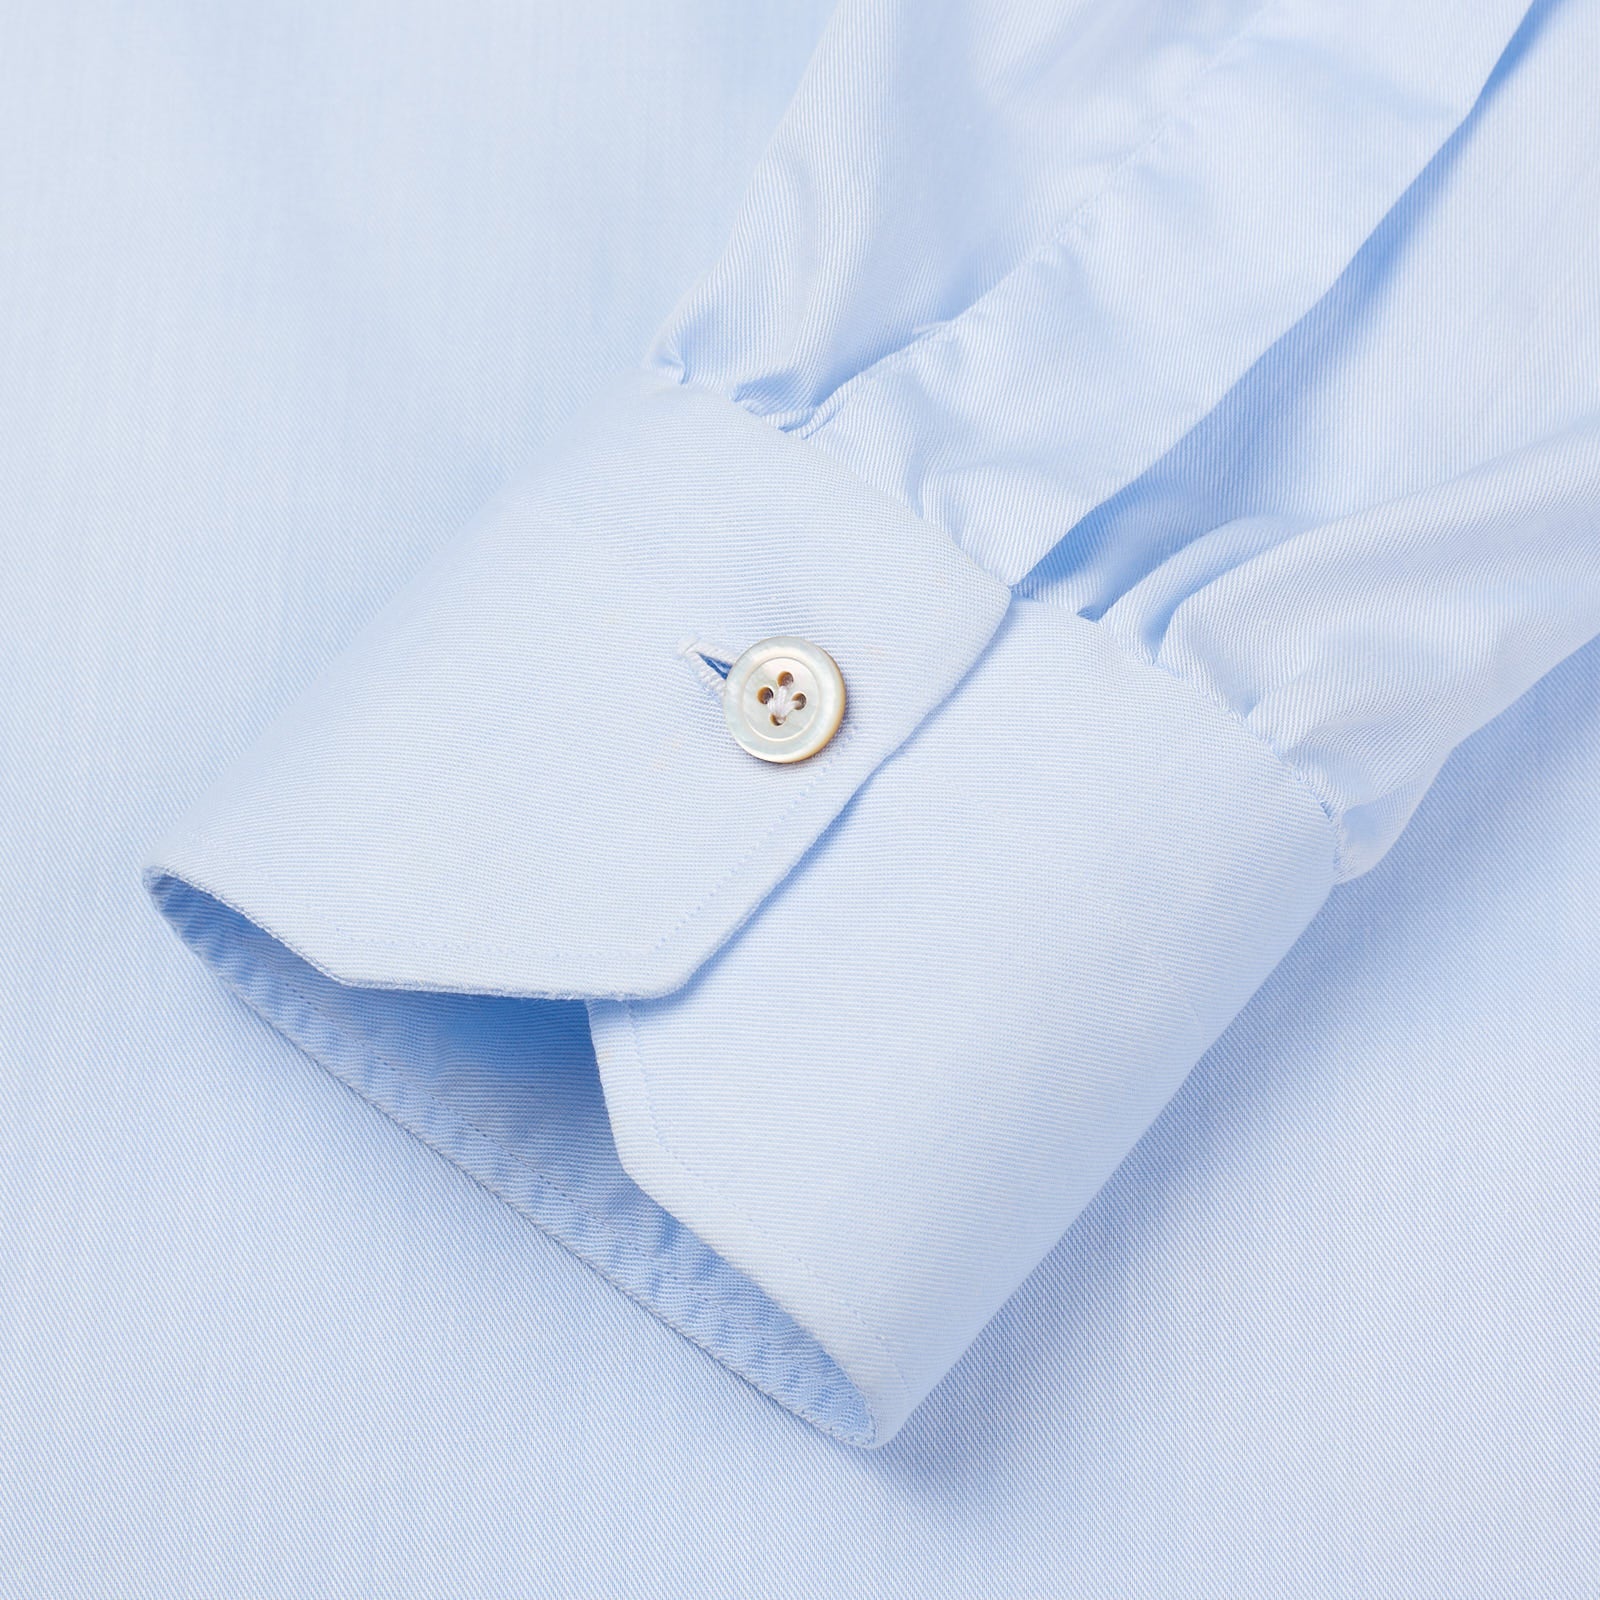 KITON Napoli Handmade Bespoke Light Blue Twill Cotton Dress Shirt EU 40 NEW US 15.75 KITON